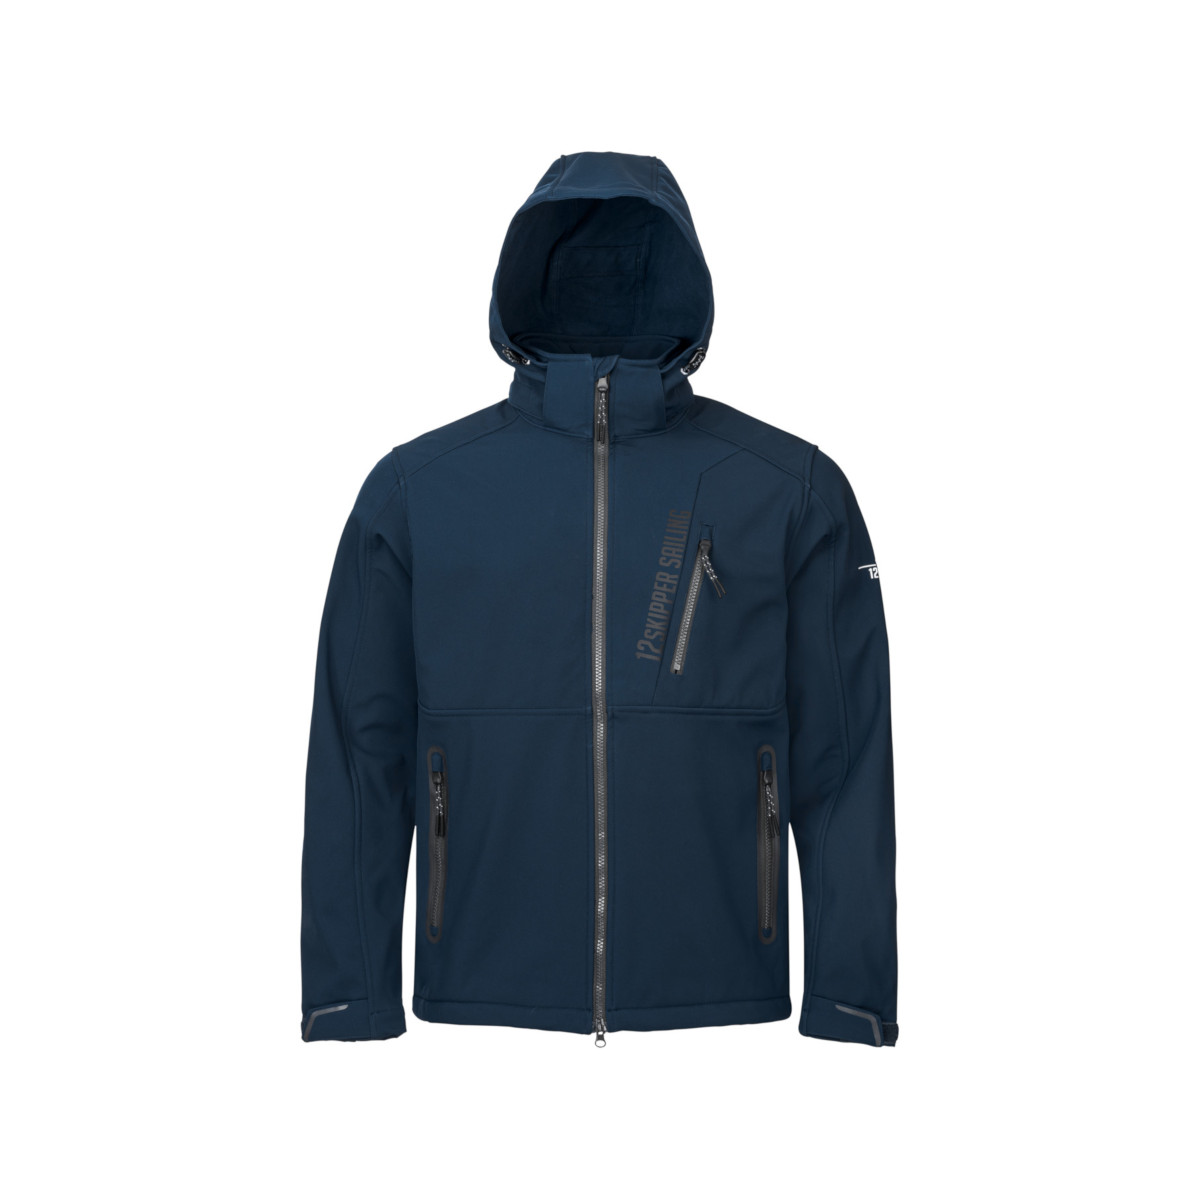 12skipper Amundsen veste softshell unisexe - bleu marine, taille M